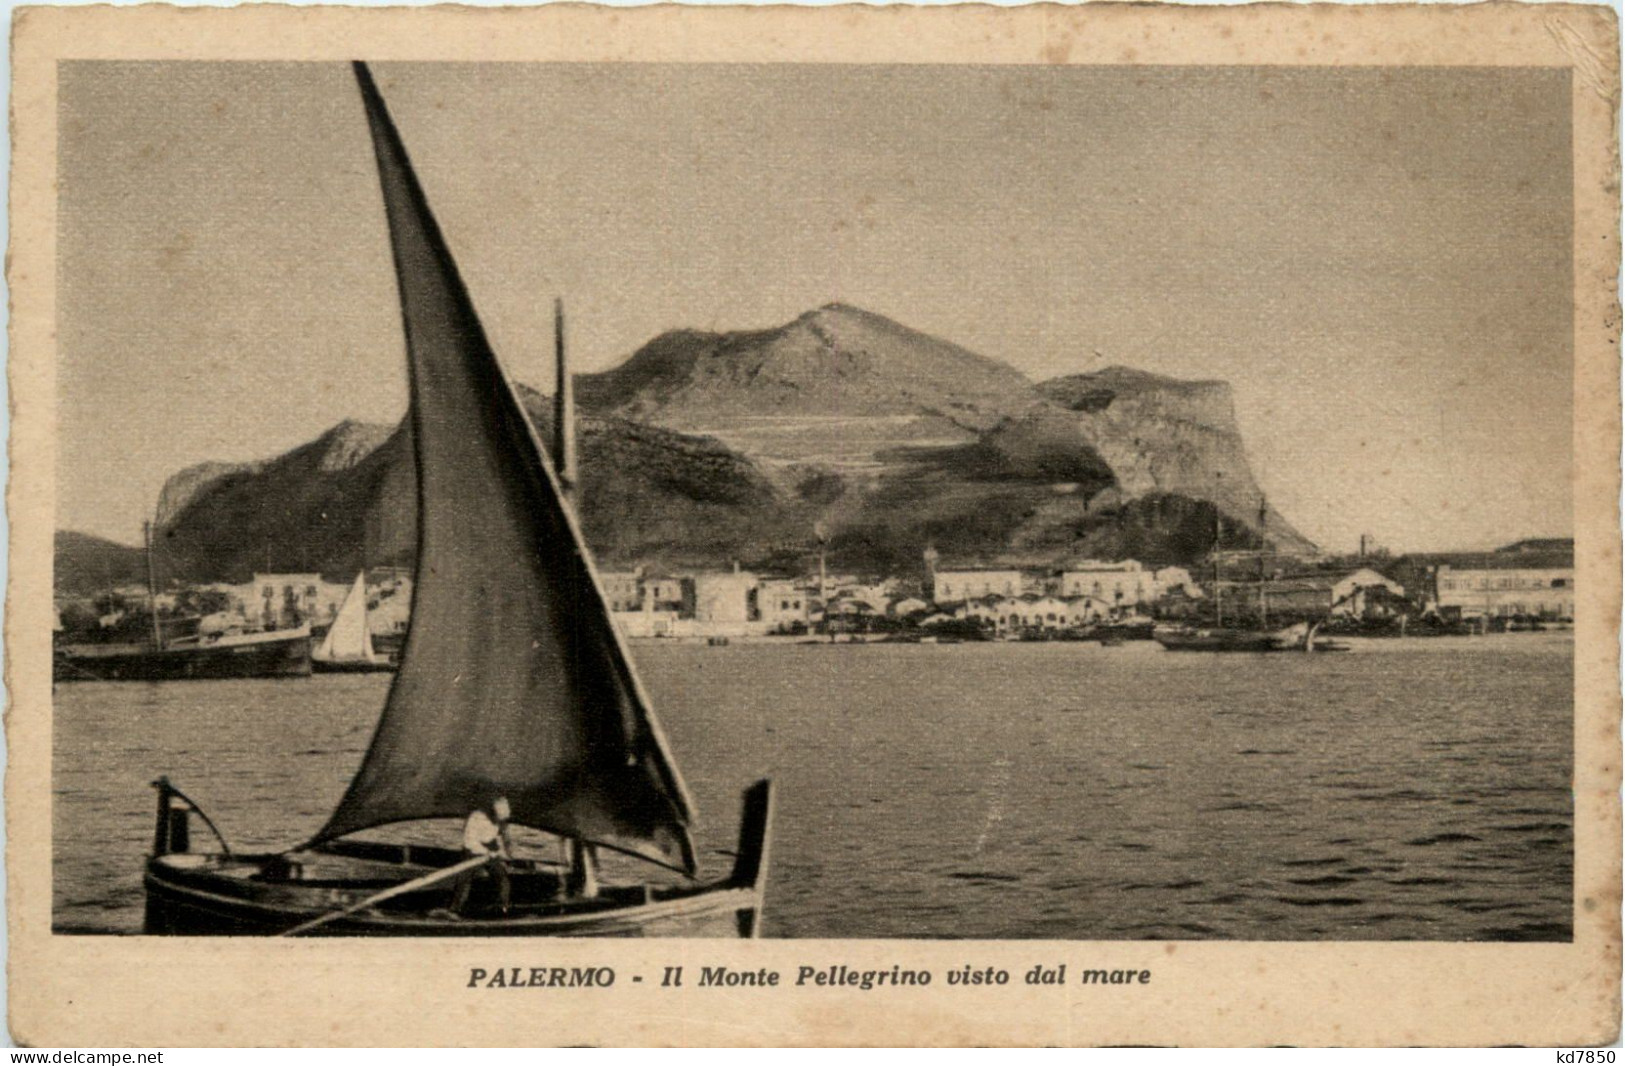 Palermo - Palermo